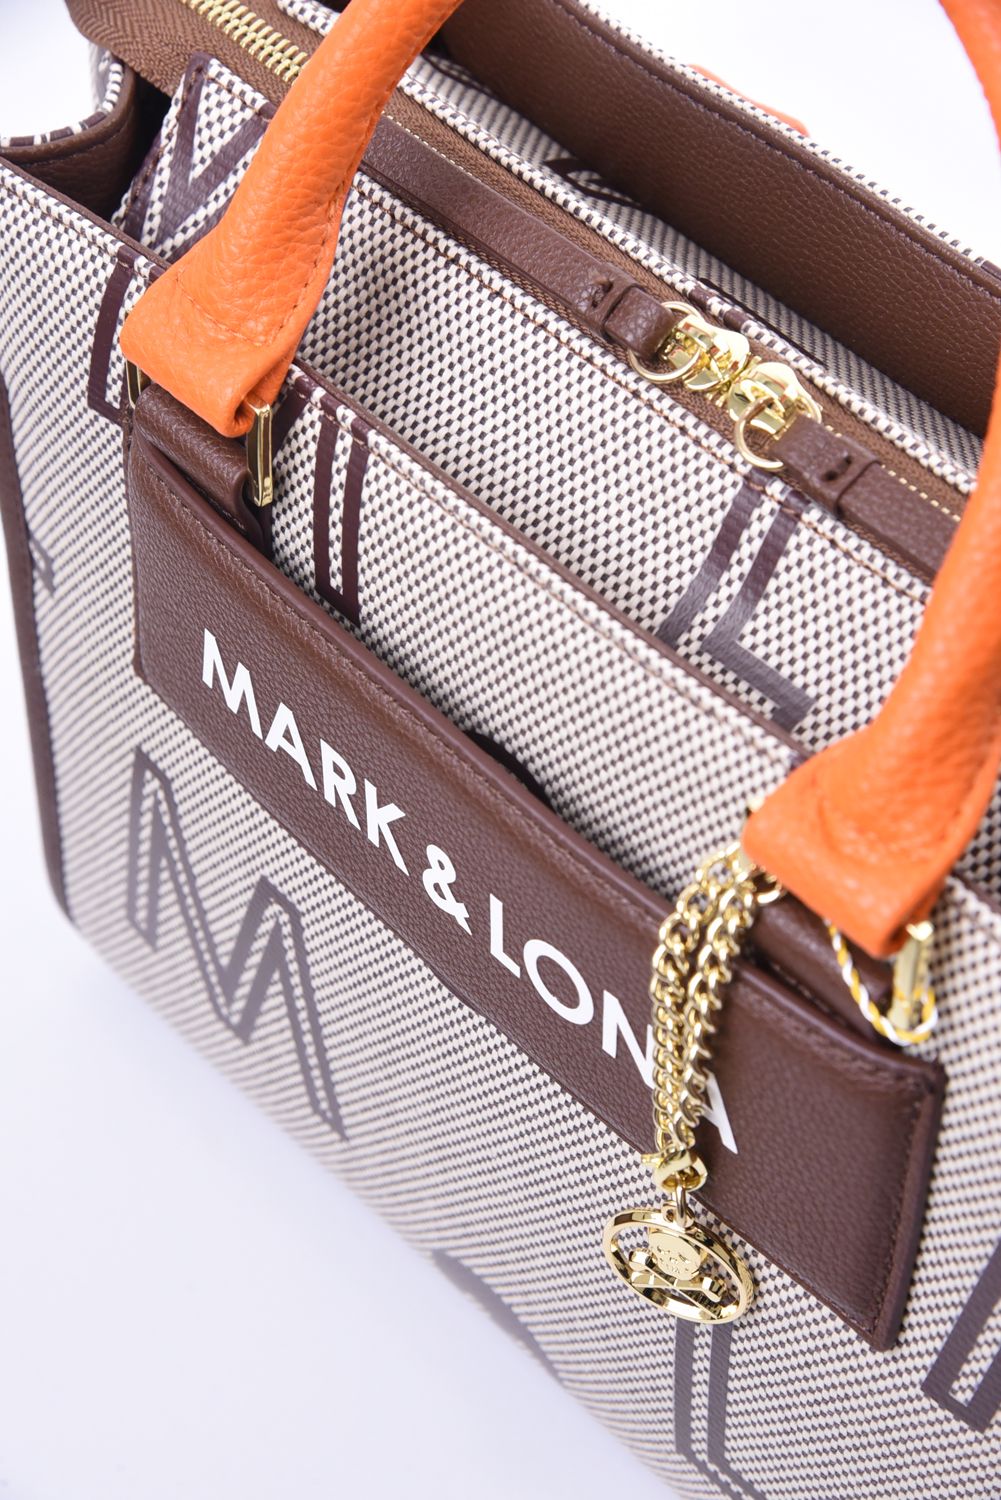 MARK&LONA - U.T.N.Y Mini Bag / ロゴ パターン カートバッグ ブラウン